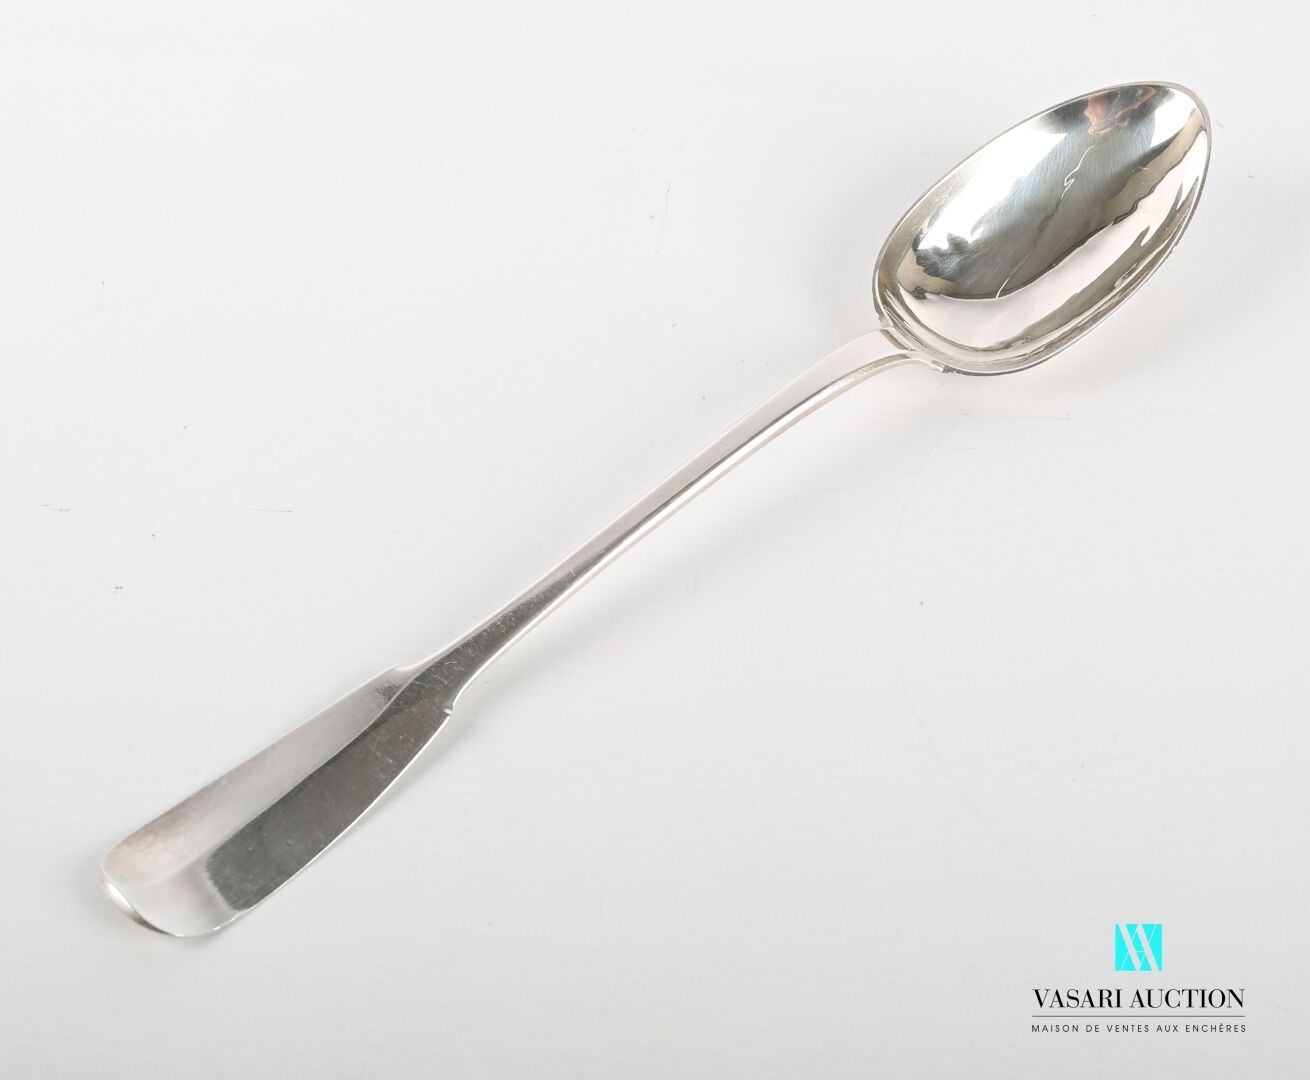 Null 一把银质的炖汤匙，有一个扁平的手柄。

鲁昂1787年

金匠大师：Mathieu Pierre Lamoureux

重量 : 130,24 g